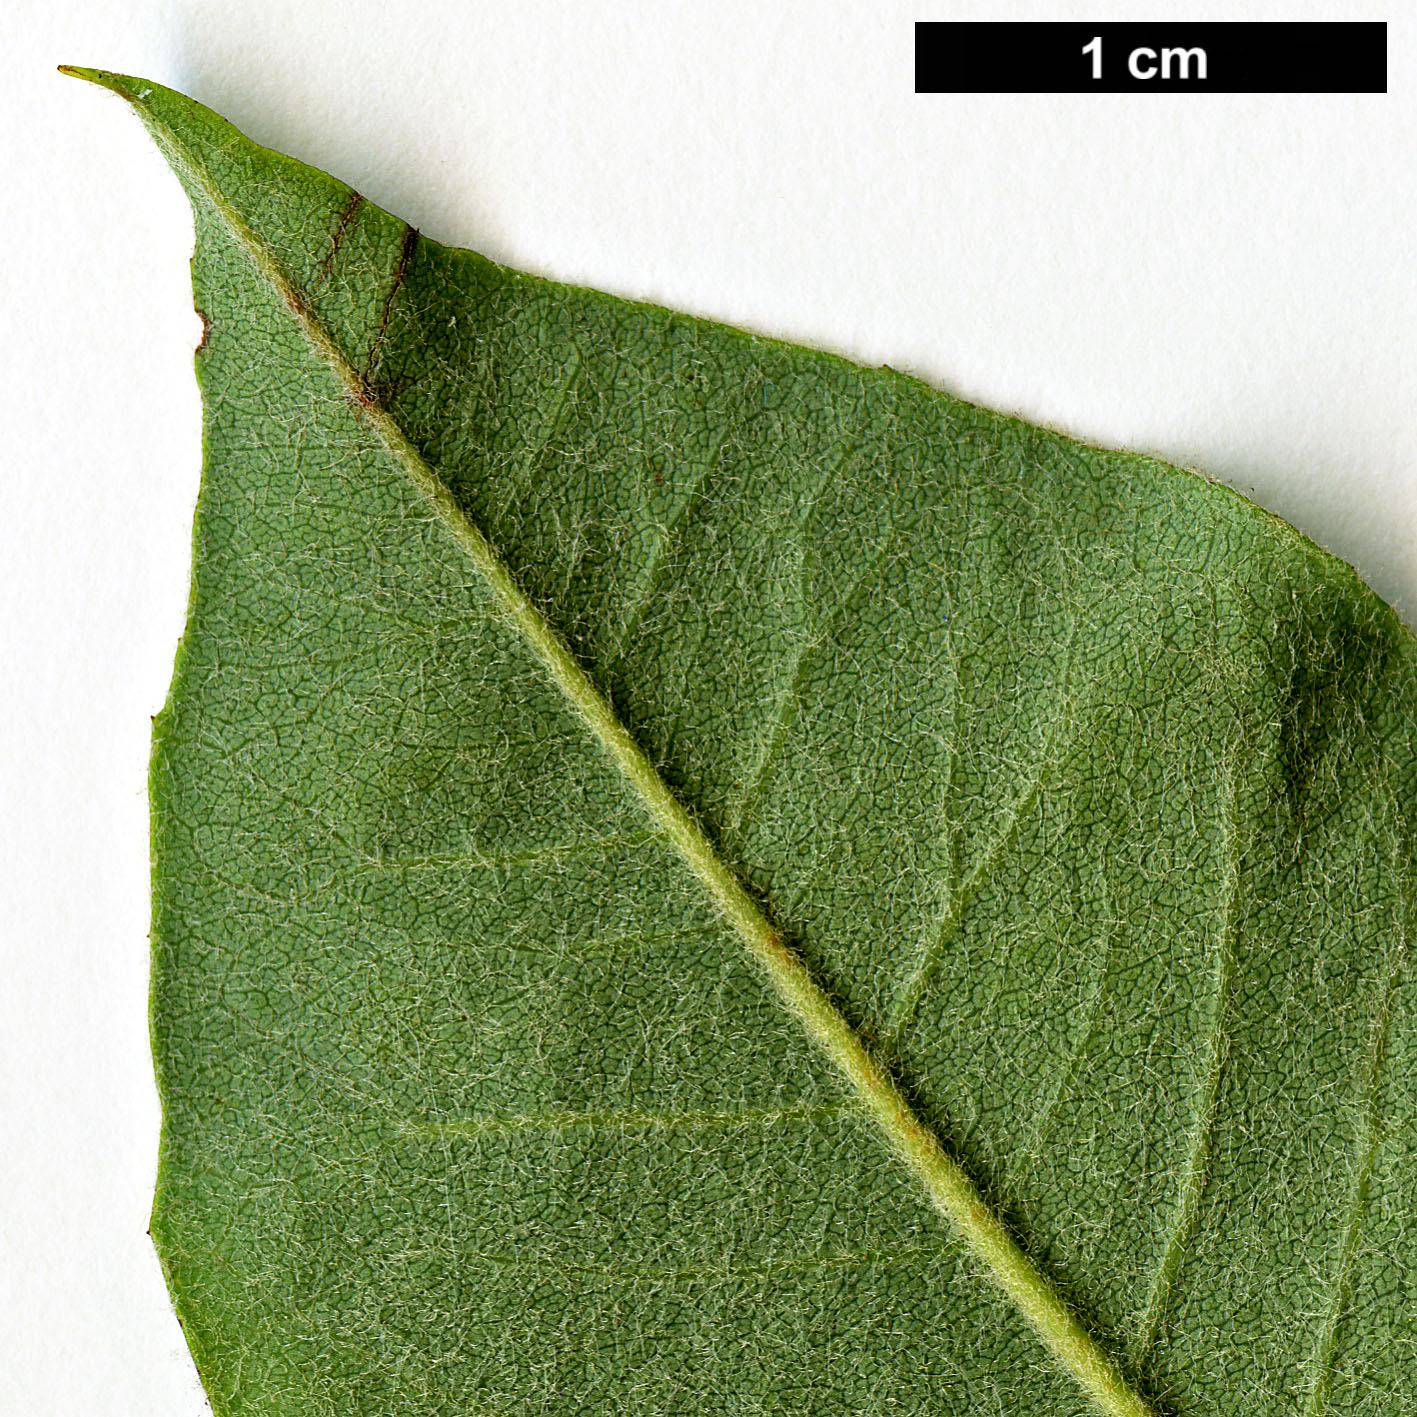 High resolution image: Family: Rosaceae - Genus: Dichotomanthes - Taxon: tristaniicarpa